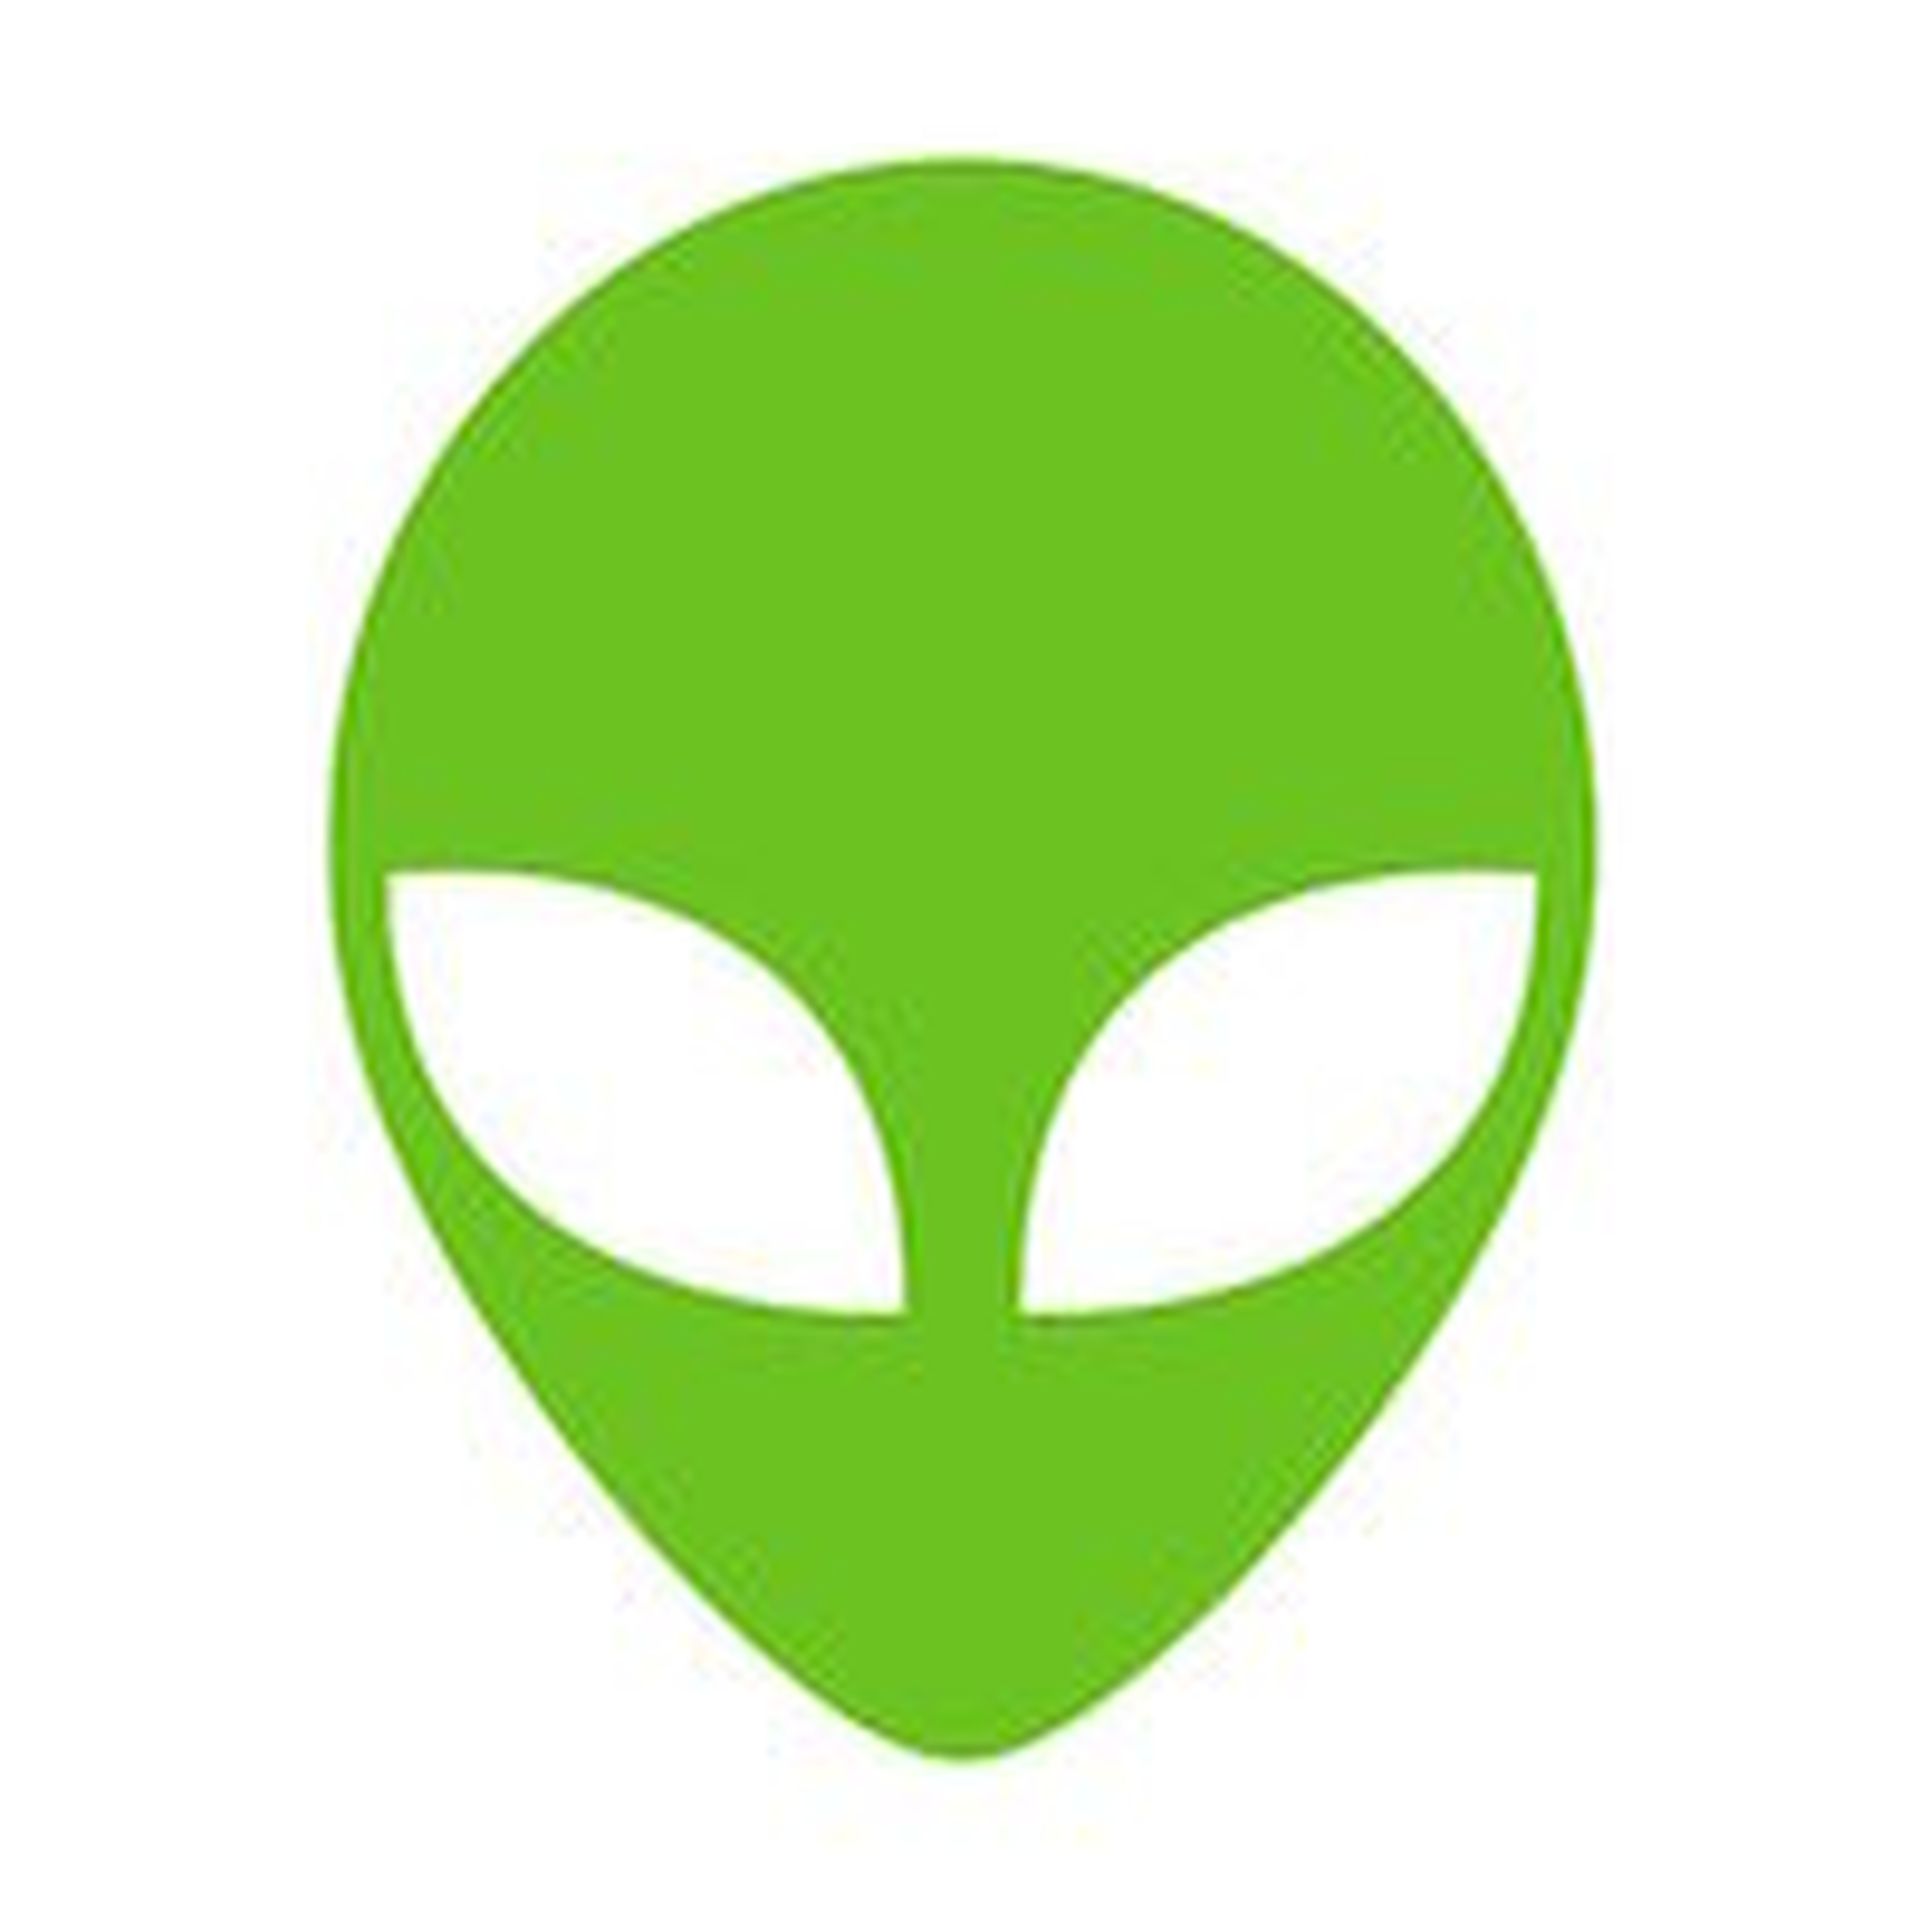 AlienVault MSSP Partner Program Information